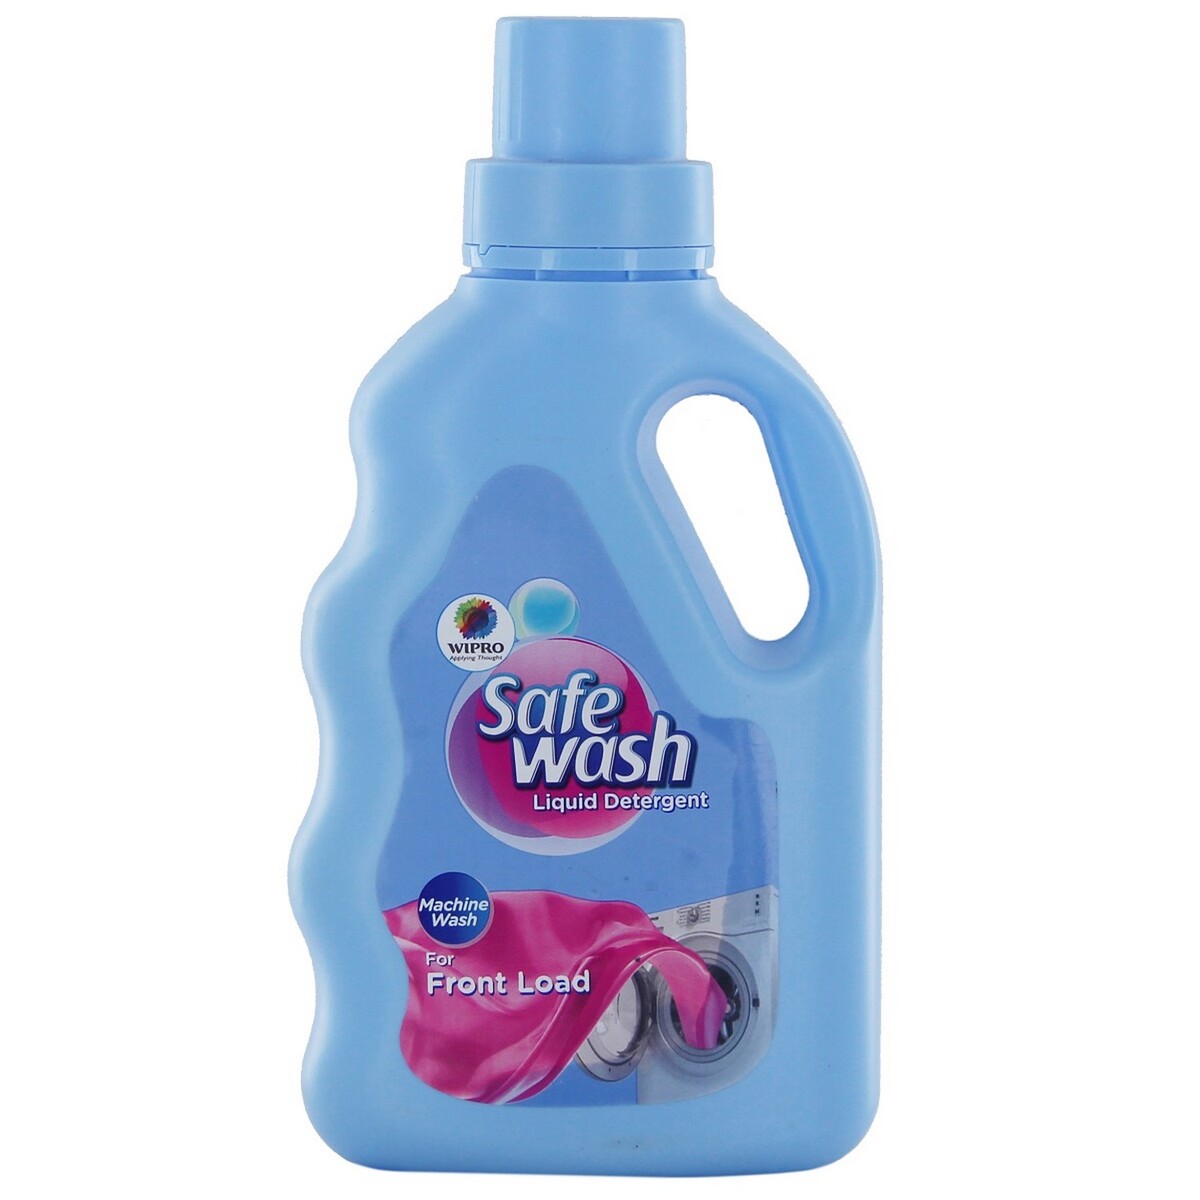 Safe Wash Liquid Detergent Front Load 500g